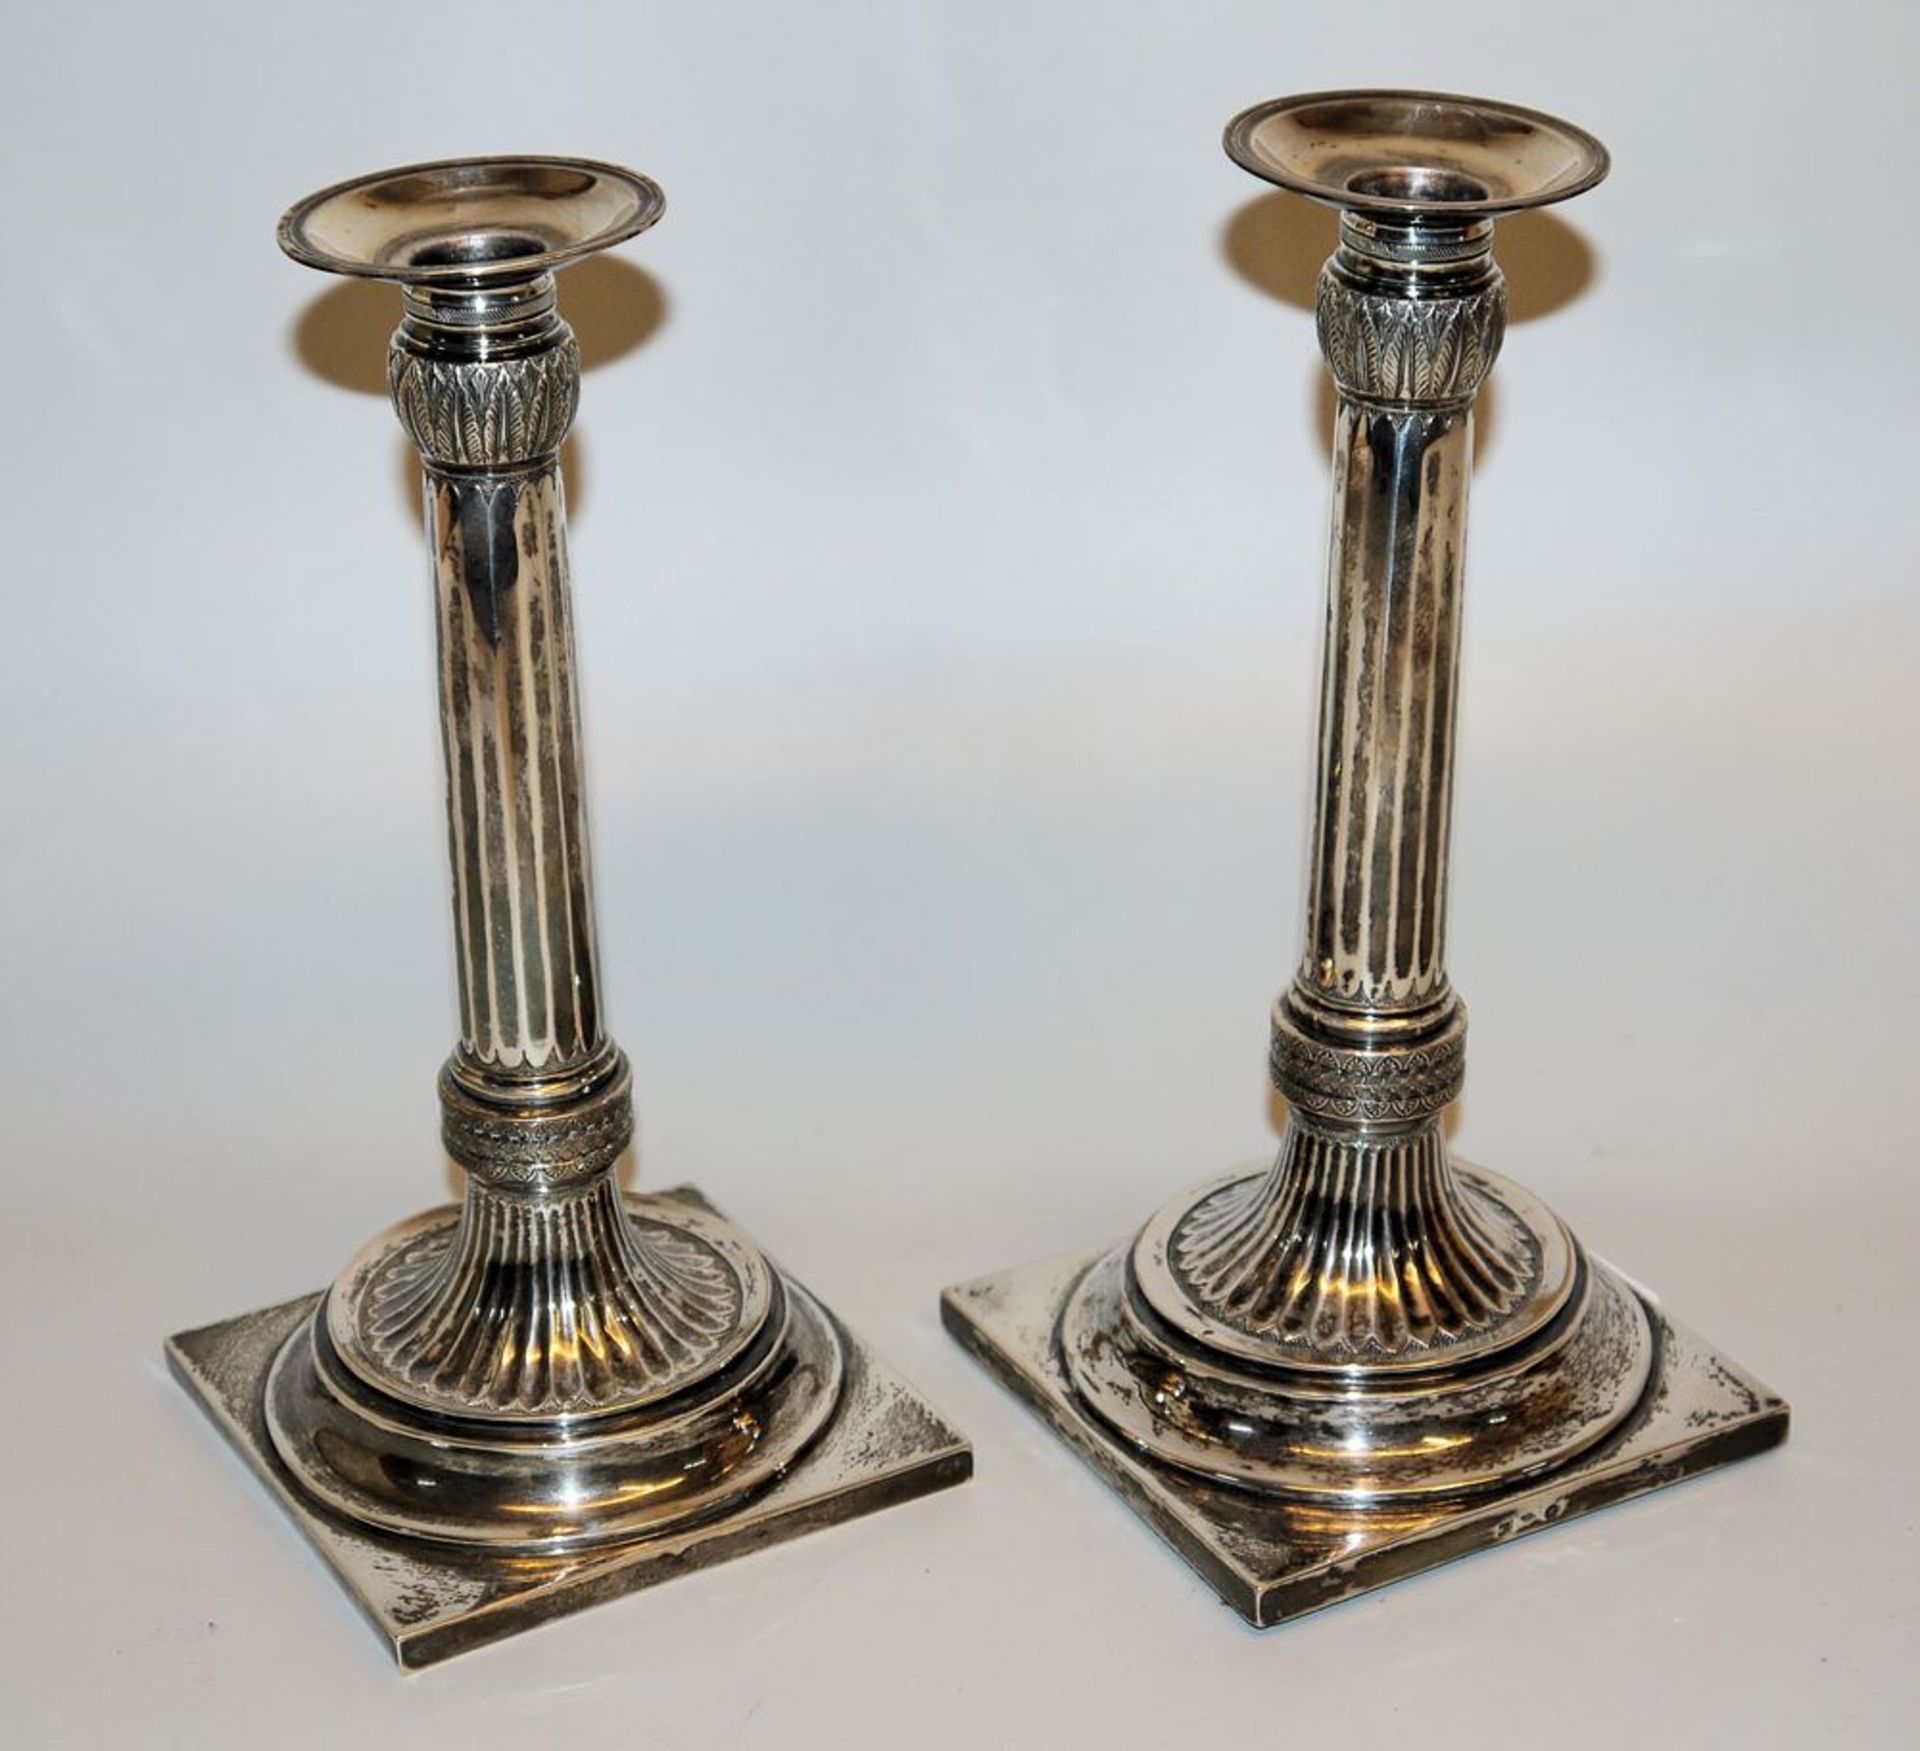 Pair of candlesticks, silver, Belgium circa 1820